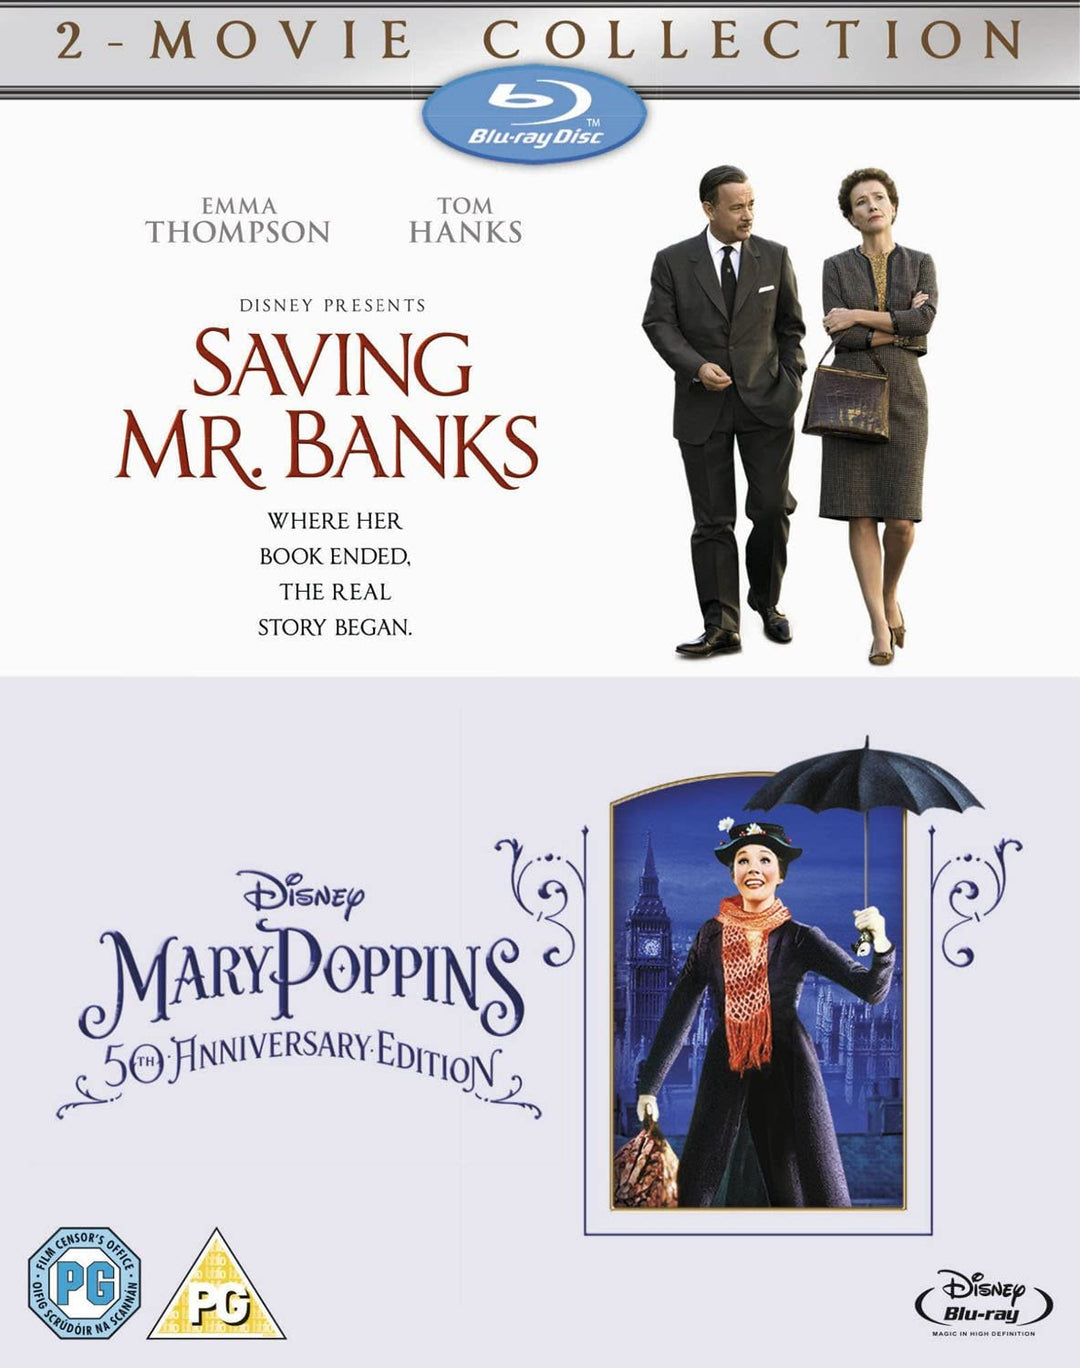 Sauver Mr Banks et Mary Poppins [Blu-ray] [Région gratuite]